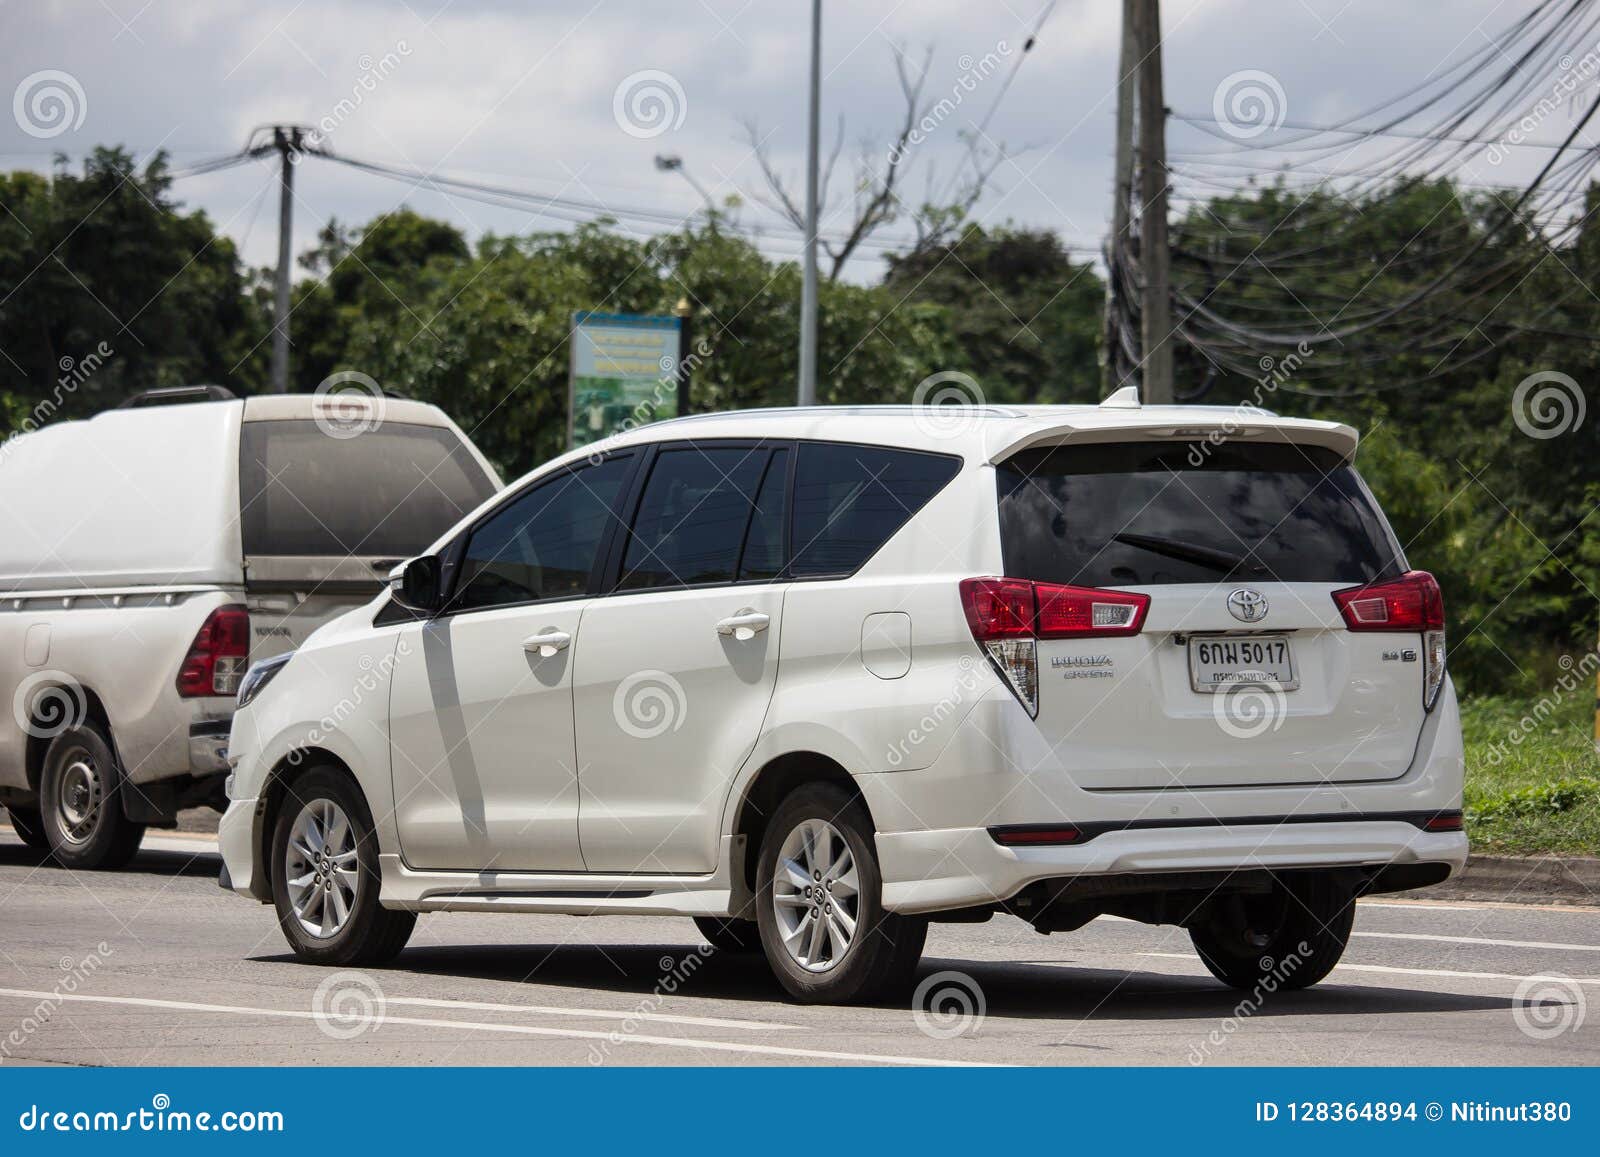 New Toyota Innova Crysta Editorial Stock Image Image Of City